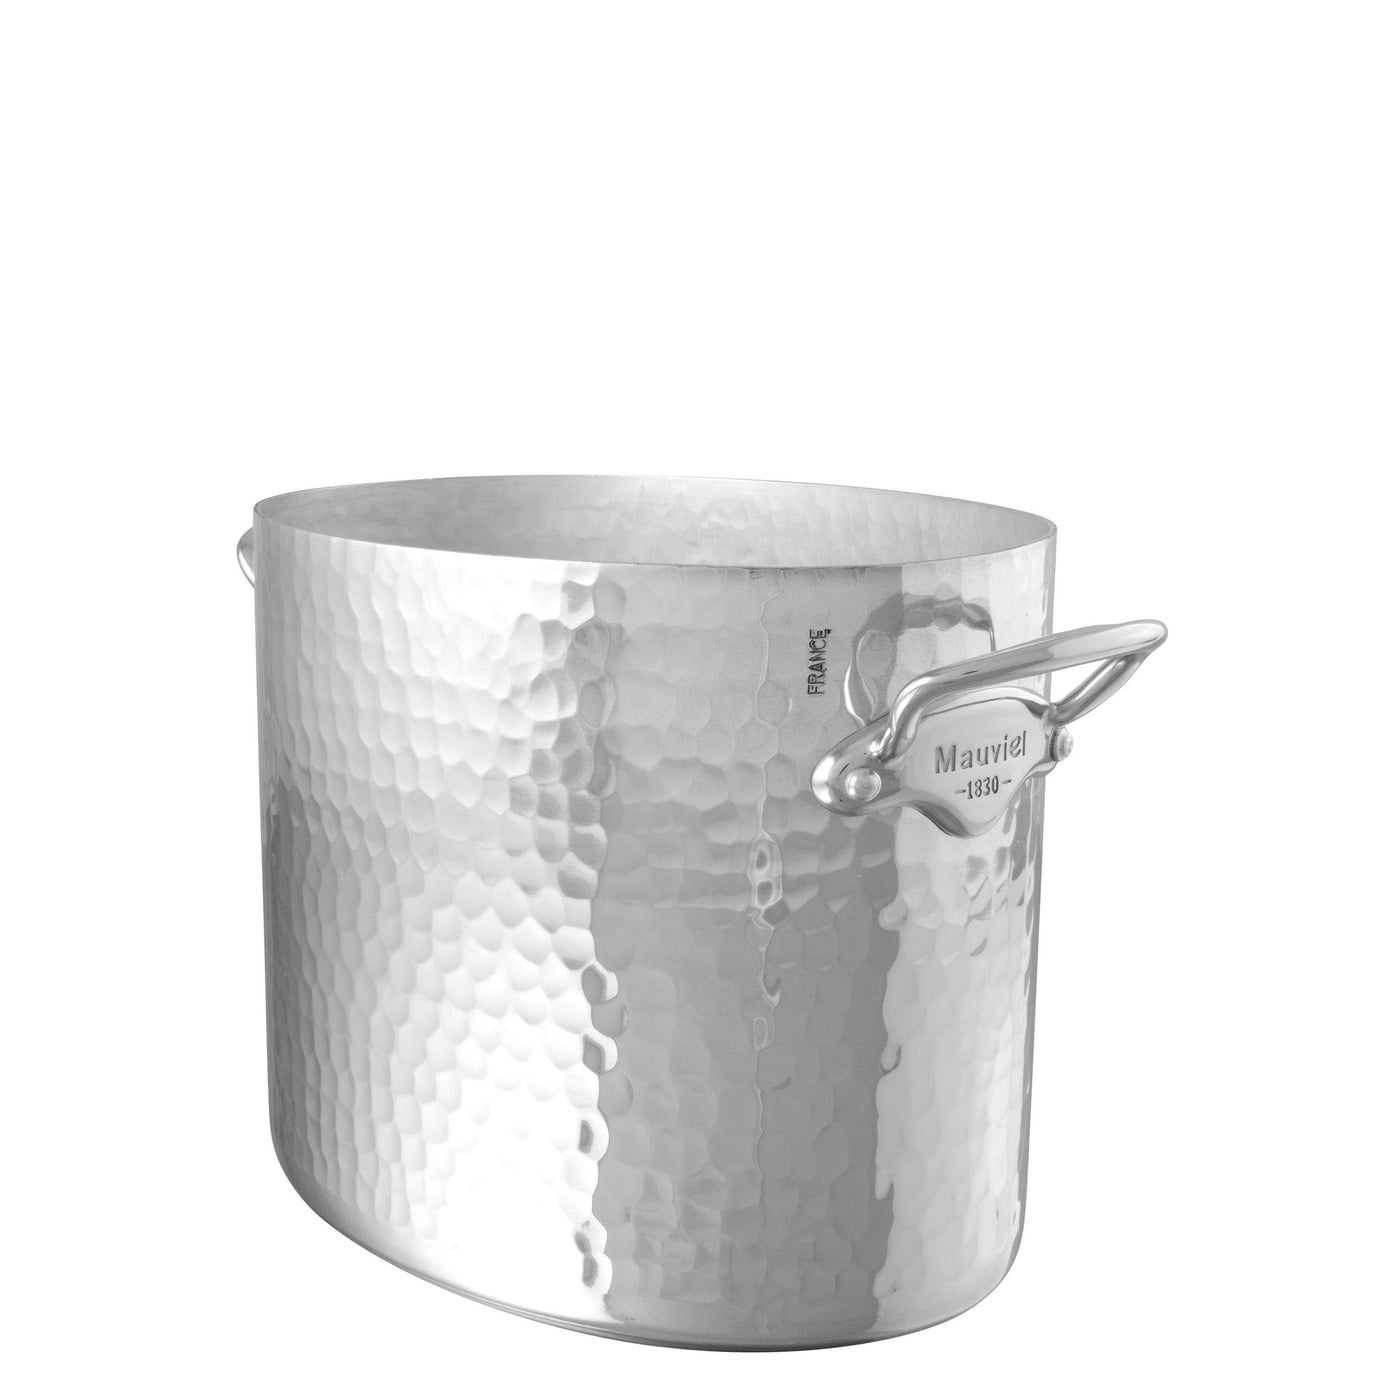 Mauviel M'30 Oval Champagne Bucket, Hammered Aluminum - Kitchen Universe